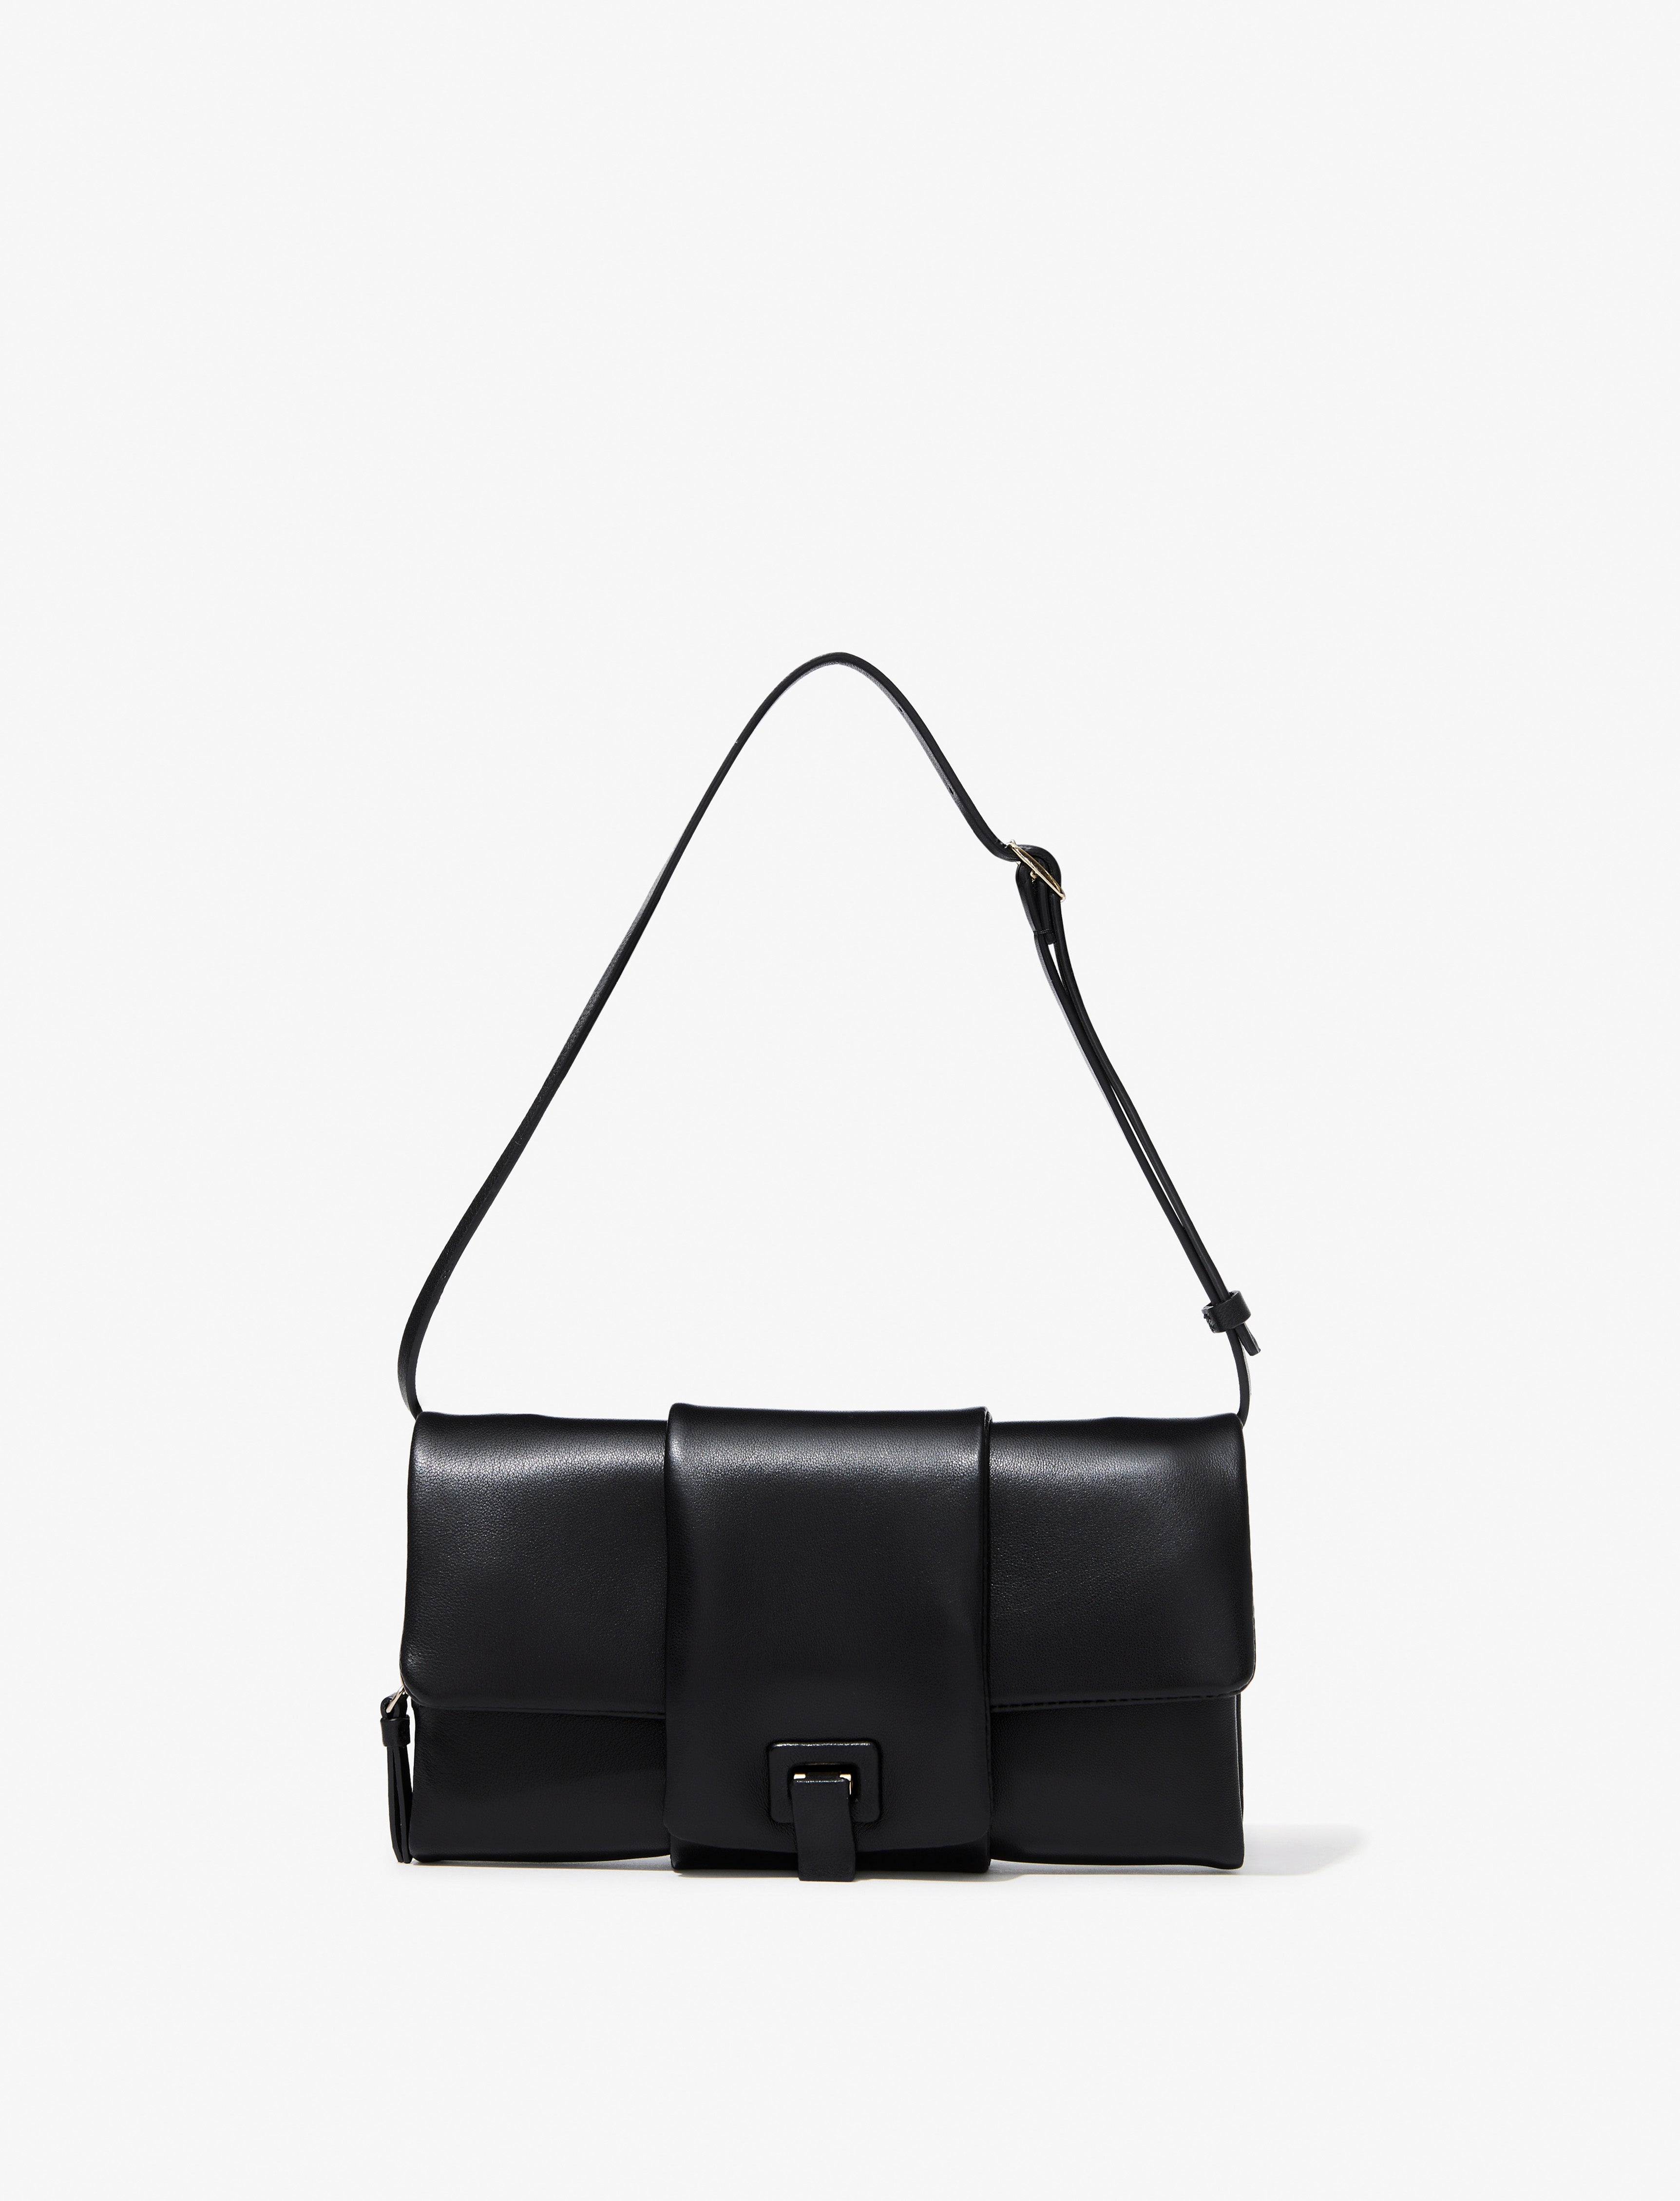 Shop Bags | Proenza Schouler - Official Site